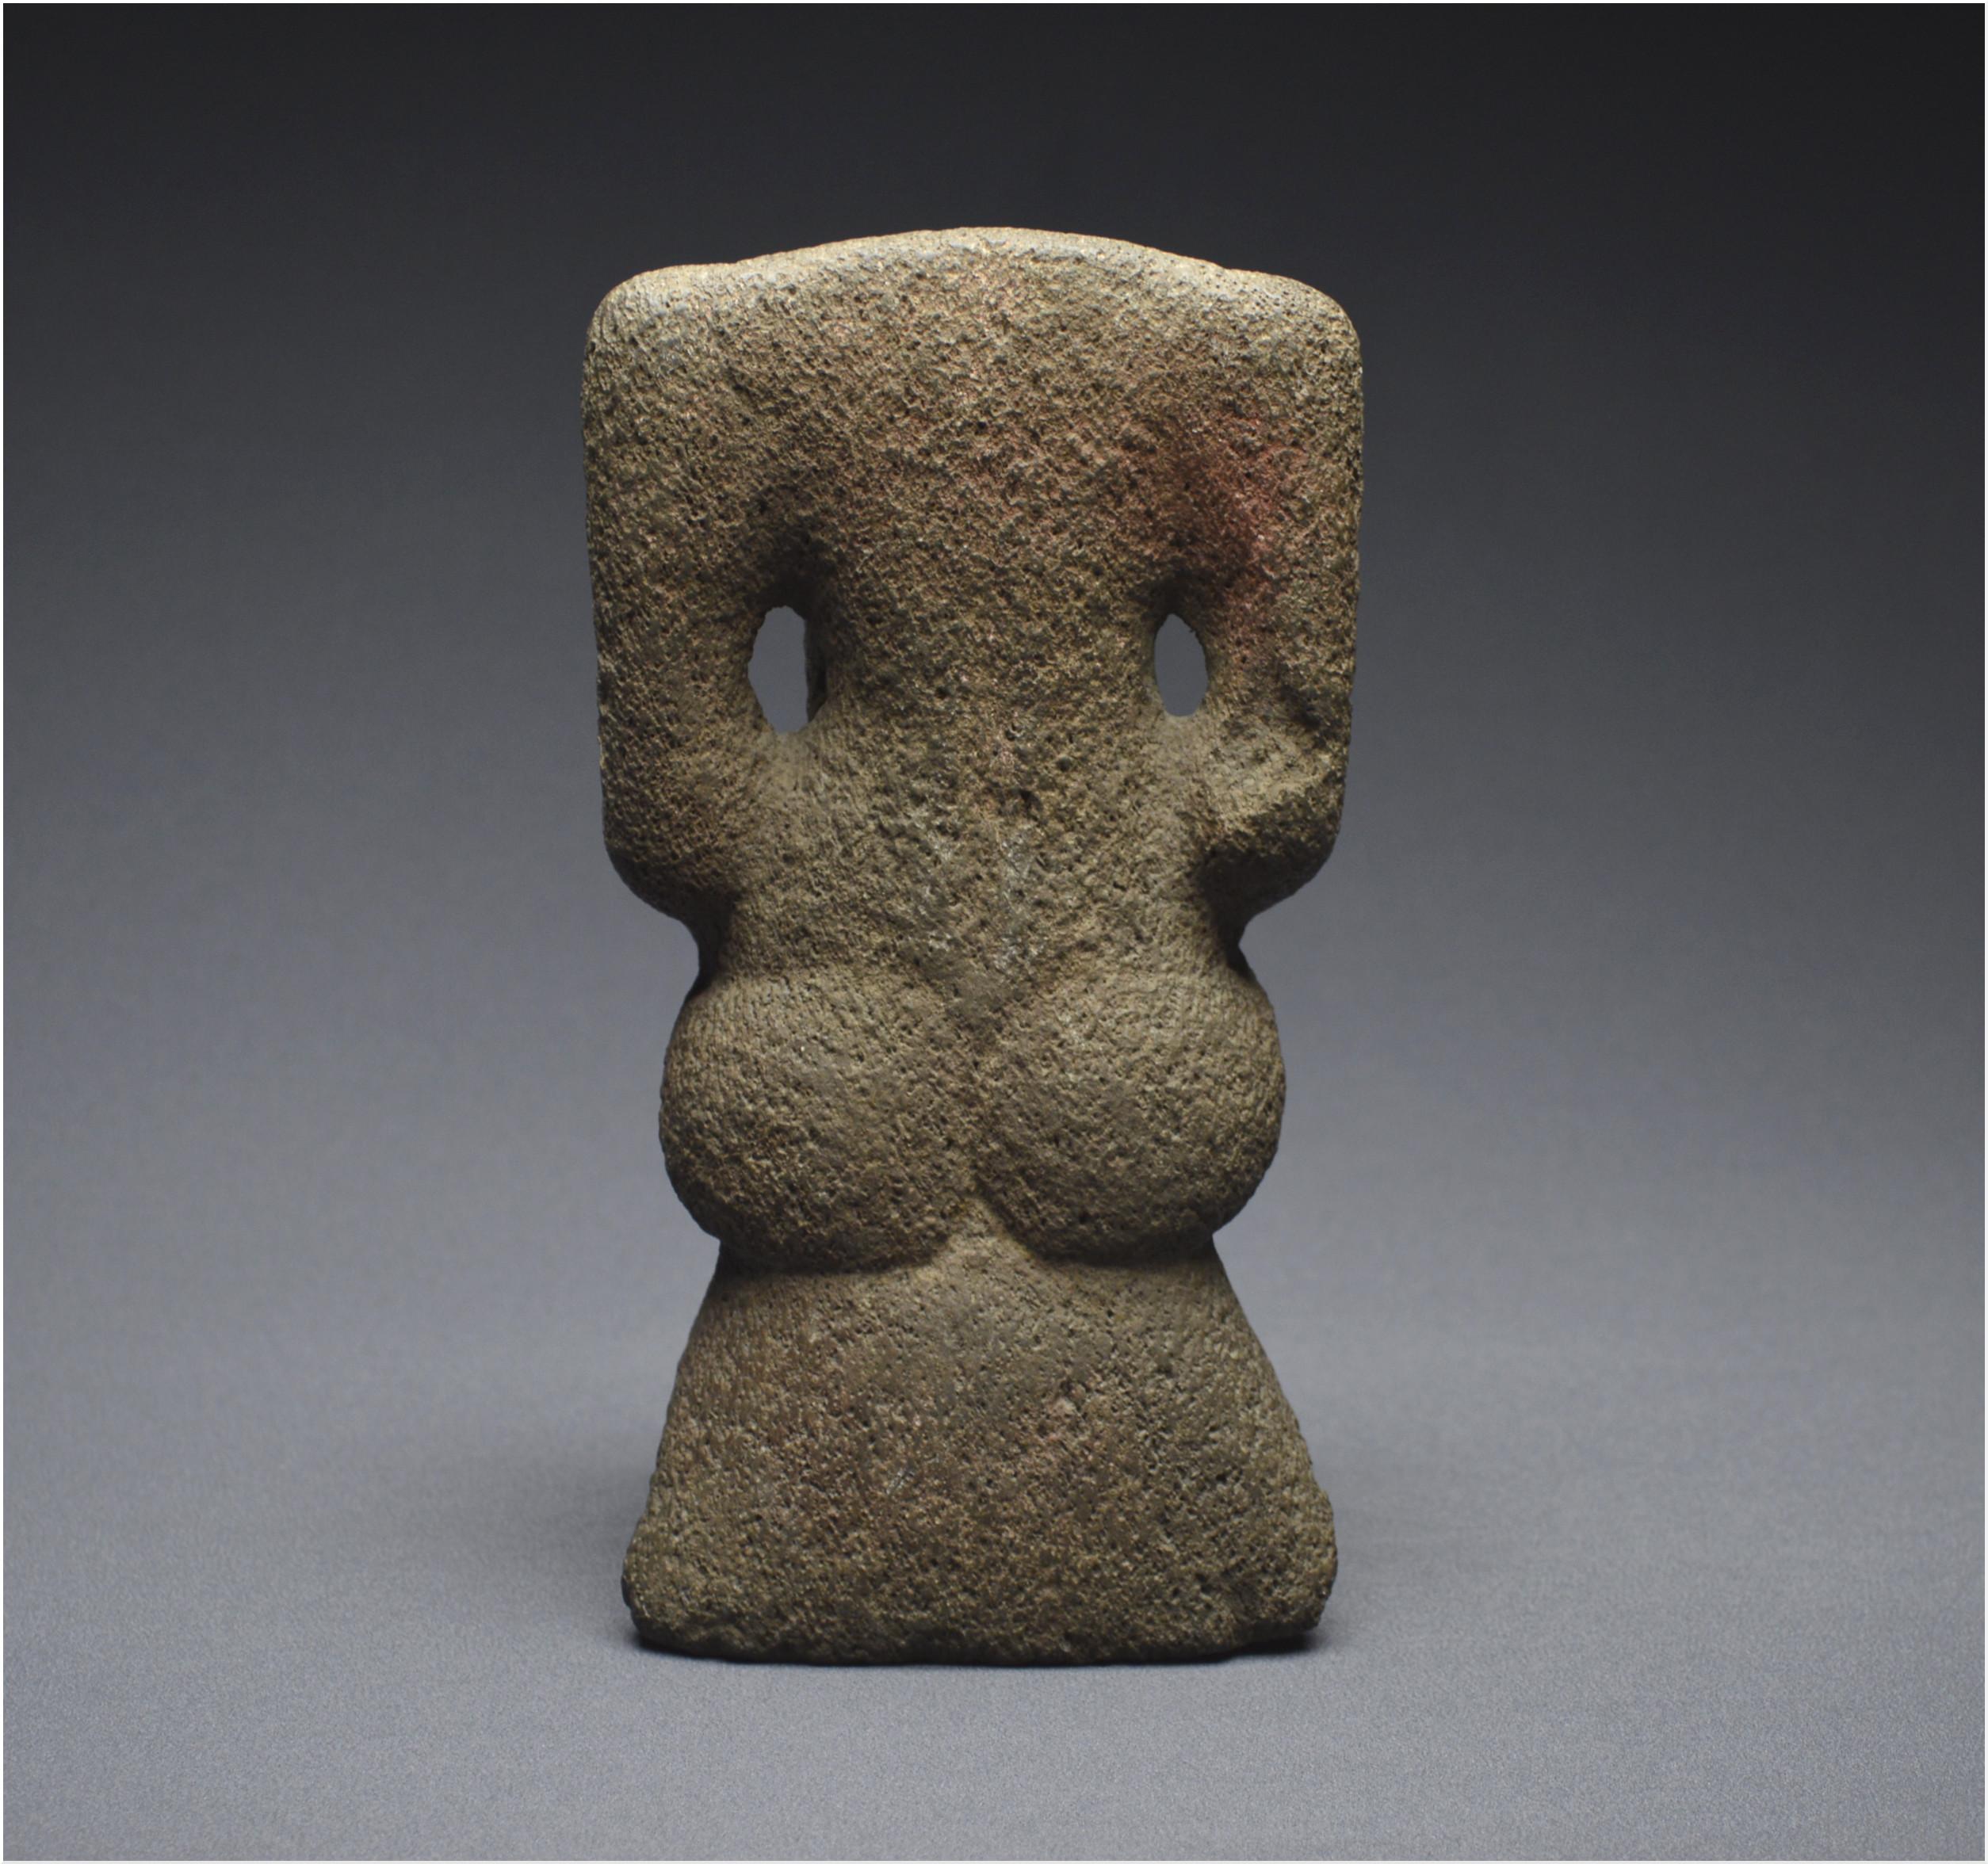 Stone Mexico, 450-550 AD, Veracruz Culture, Palma Depicting a Headless Character